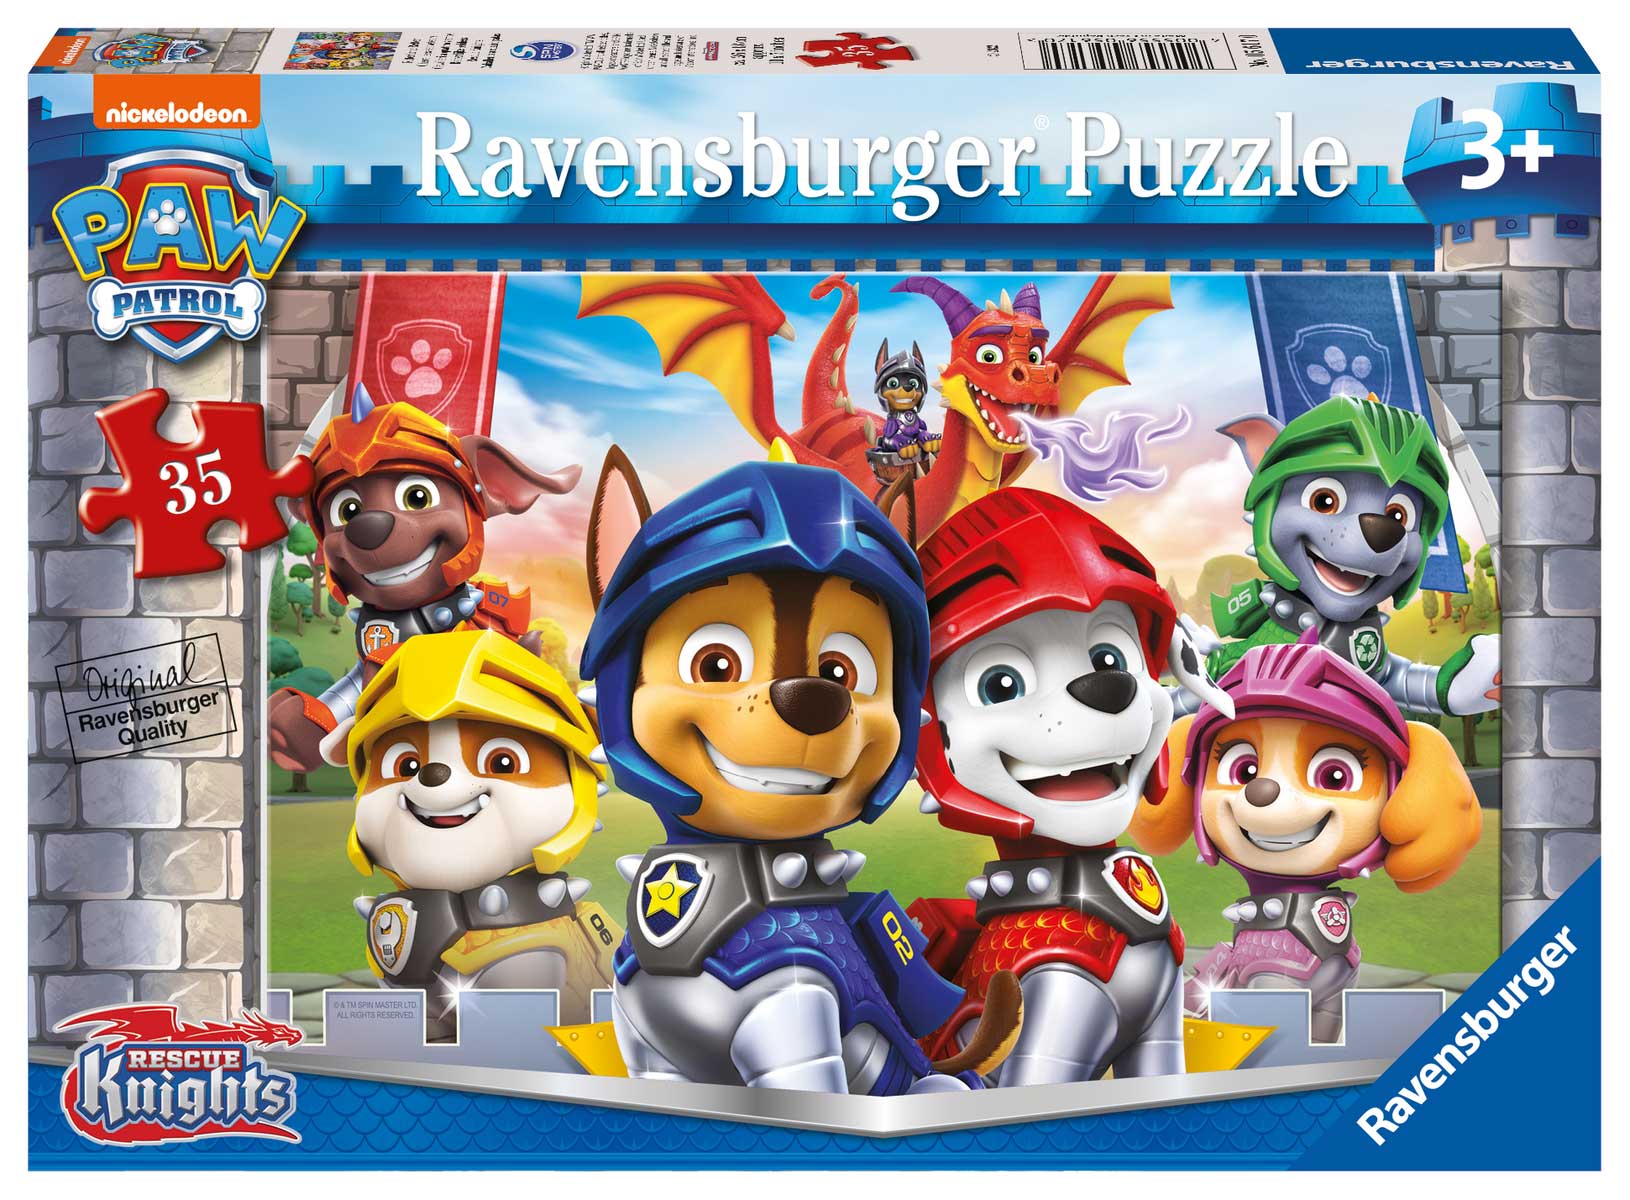 Comprar Puzzle Ravensburger Patrulla Rescue Knights 35 P - Ravensburger-056170